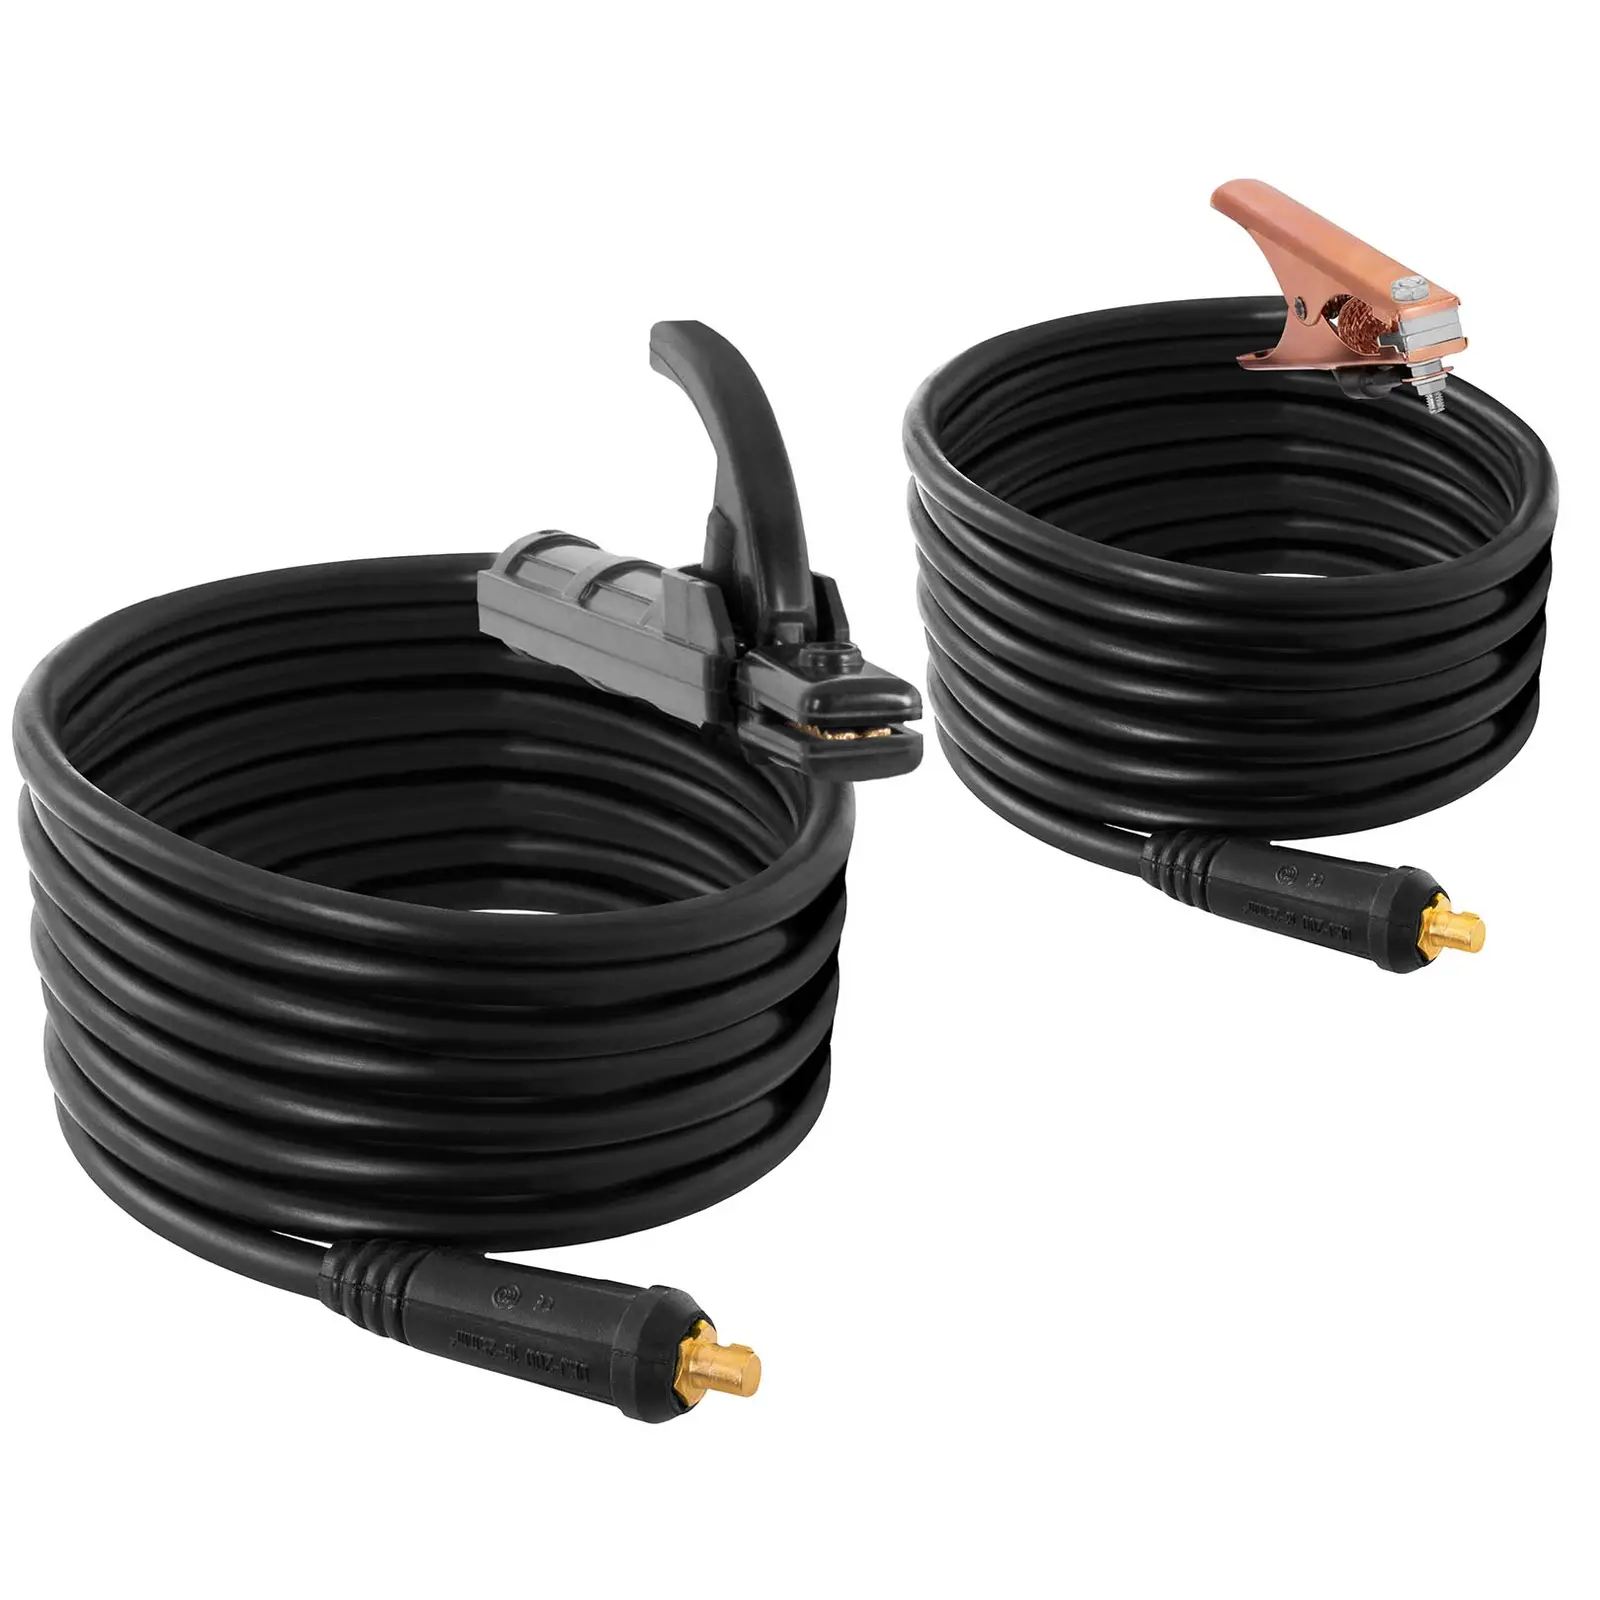 Svetsset - MMA-svets - 250 A - 8 m kabel - 60% Duty Cycle - Svetselektroder E308L-17 - 2,5 x 300 mm - 5 kg & E6013 - Ø 2,5 x 350 mm - 5 kg